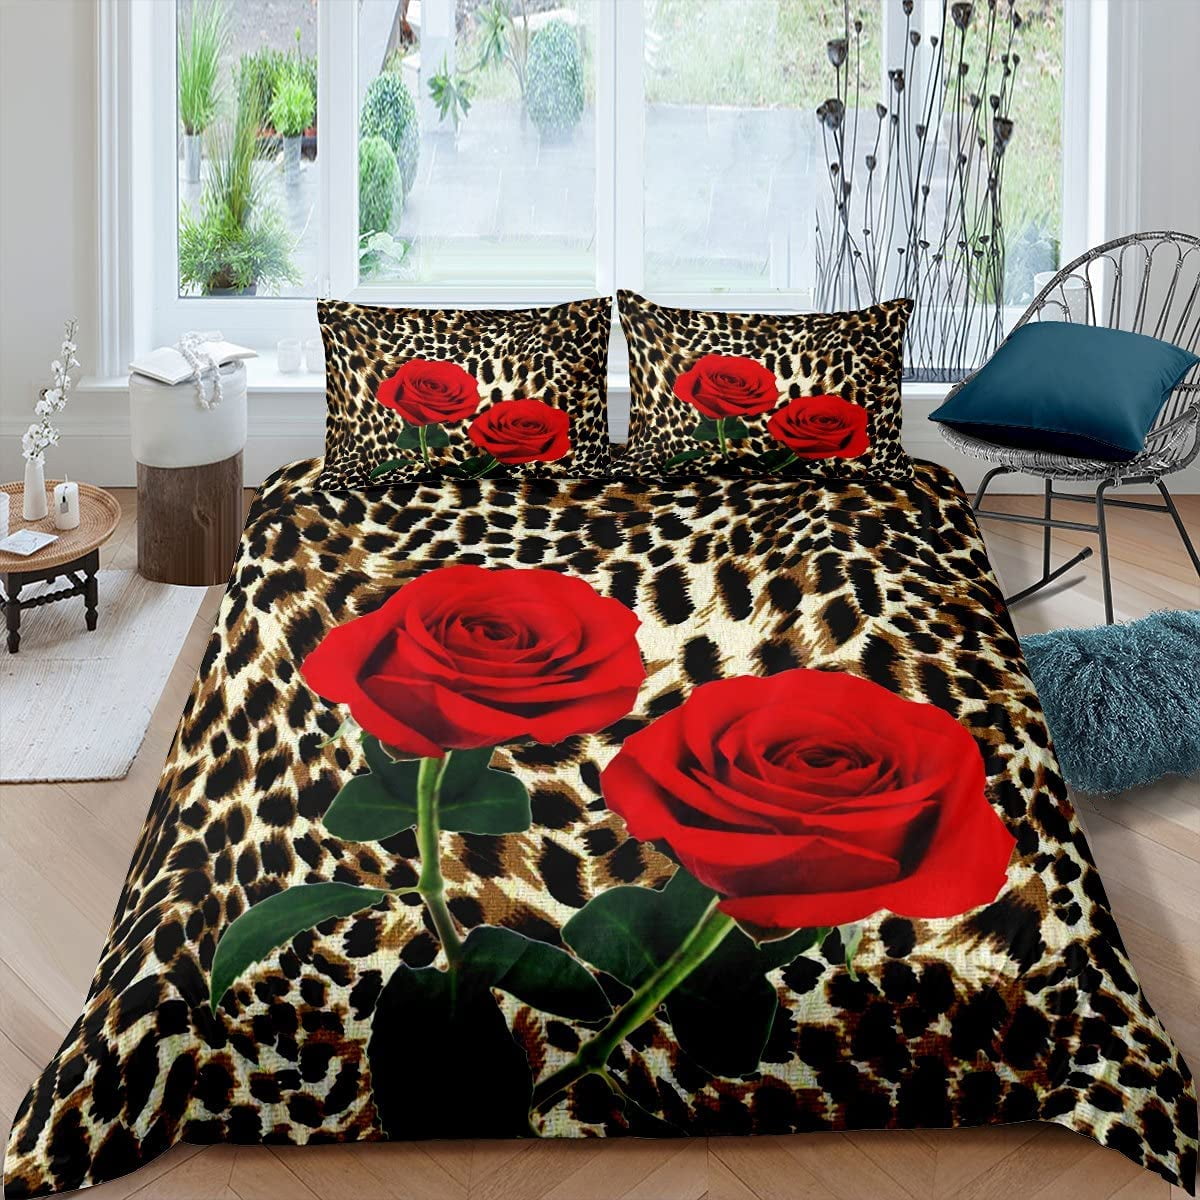 Rose Leopard Print Bedding Set For Girls Teens 3D Floral Cheetah